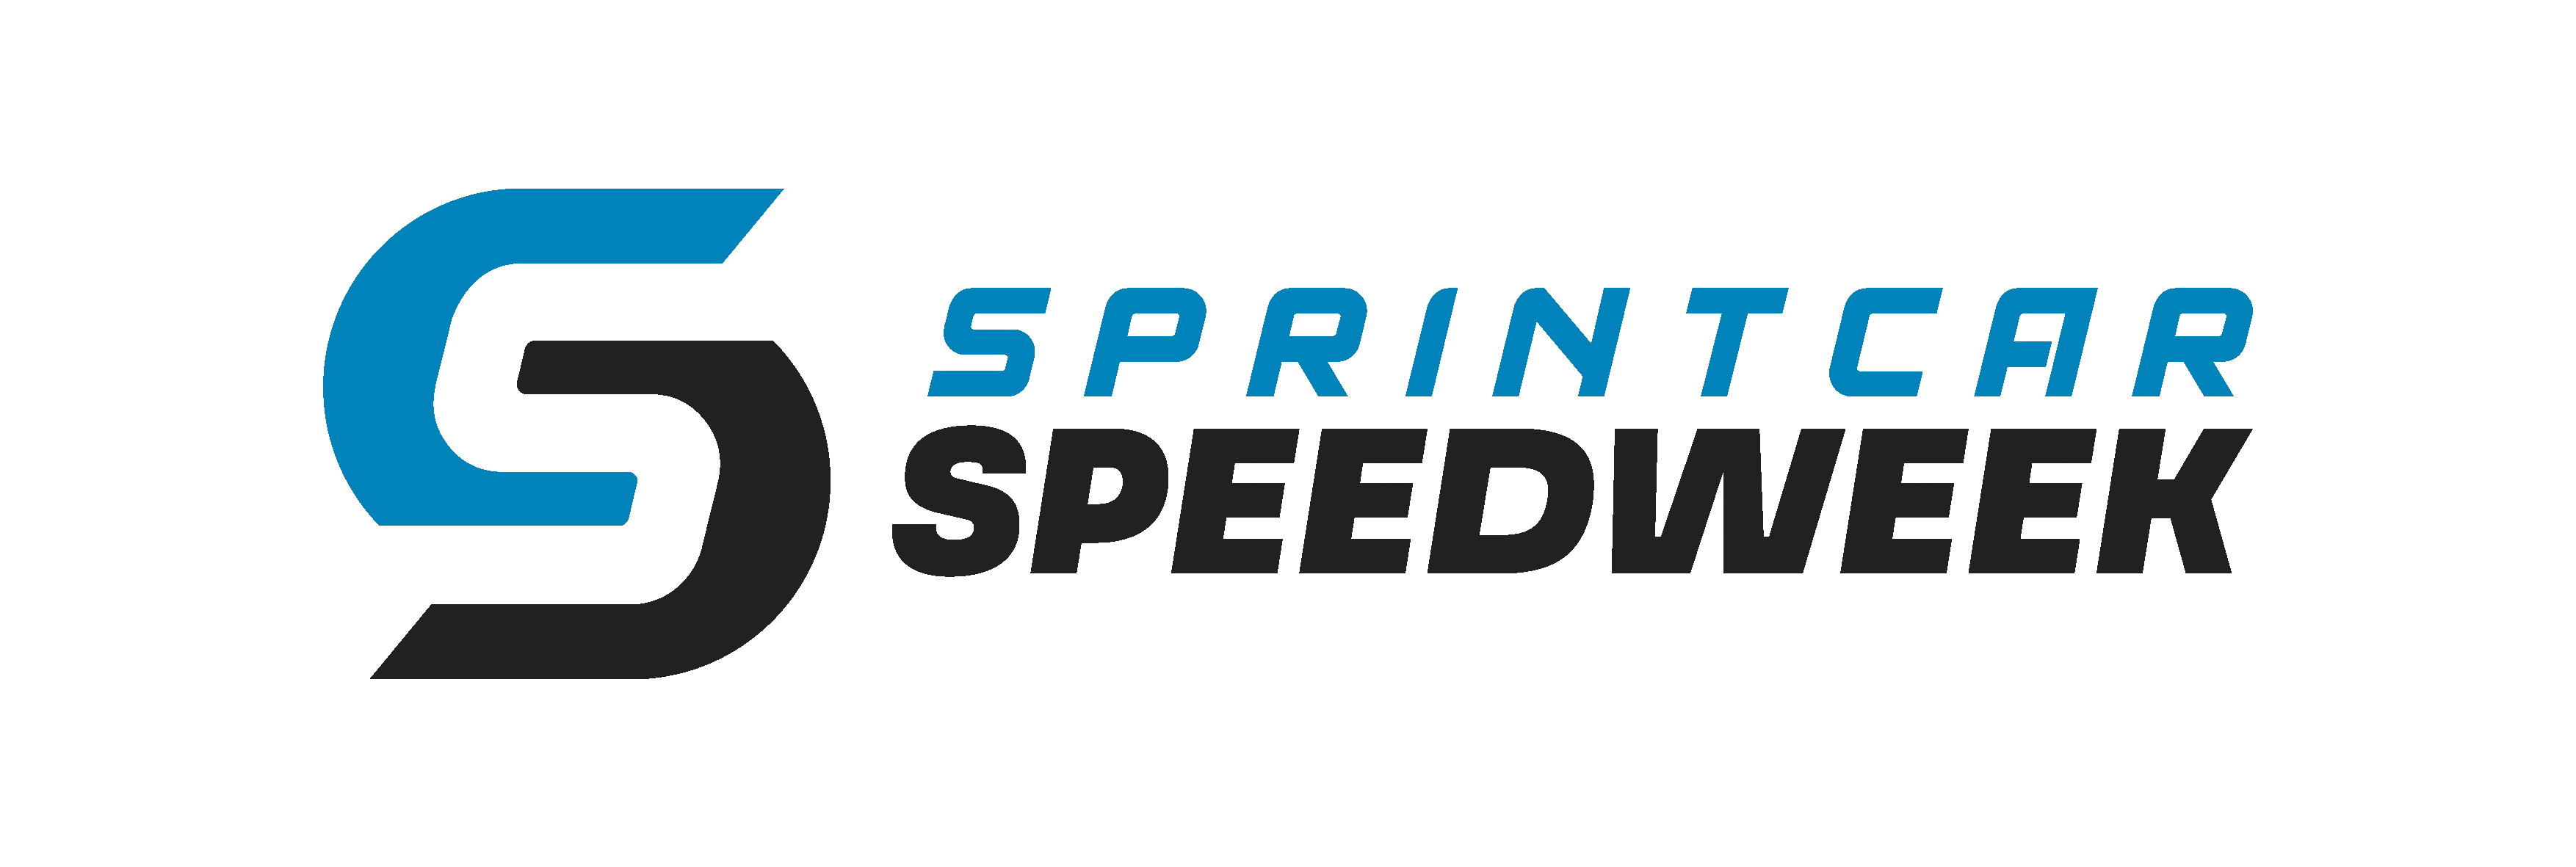 Sprintcar Speedweek Sprintcar Speedweek